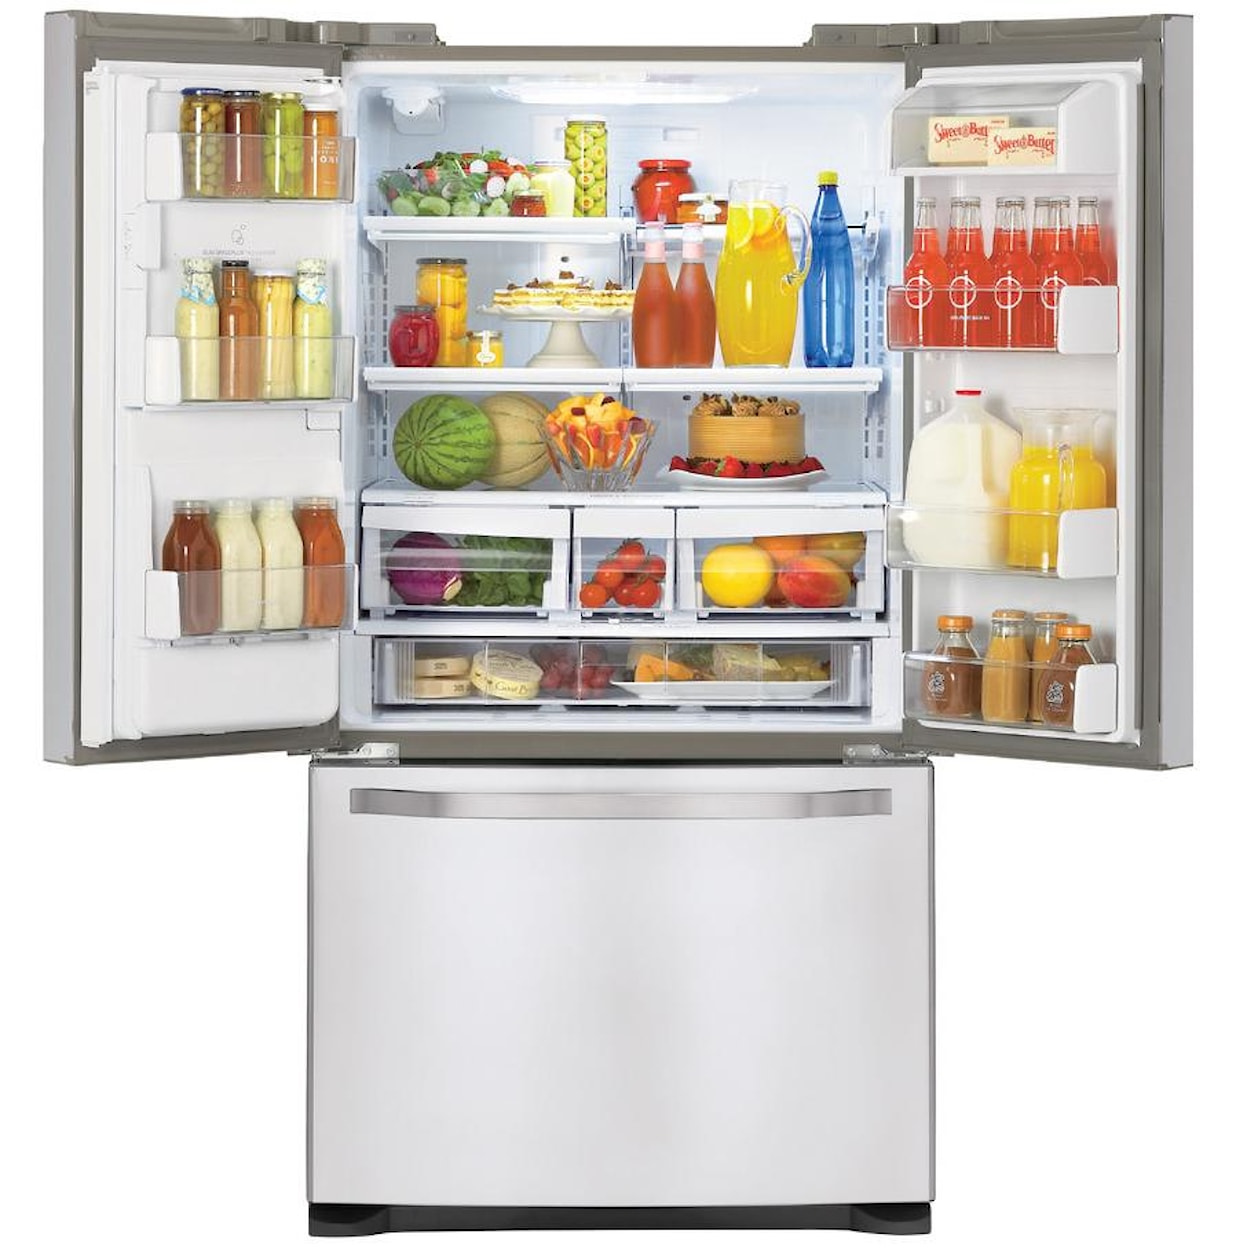 LG Appliances LG Studio Series 20.5 Cu. Ft. French Door Refrigerator